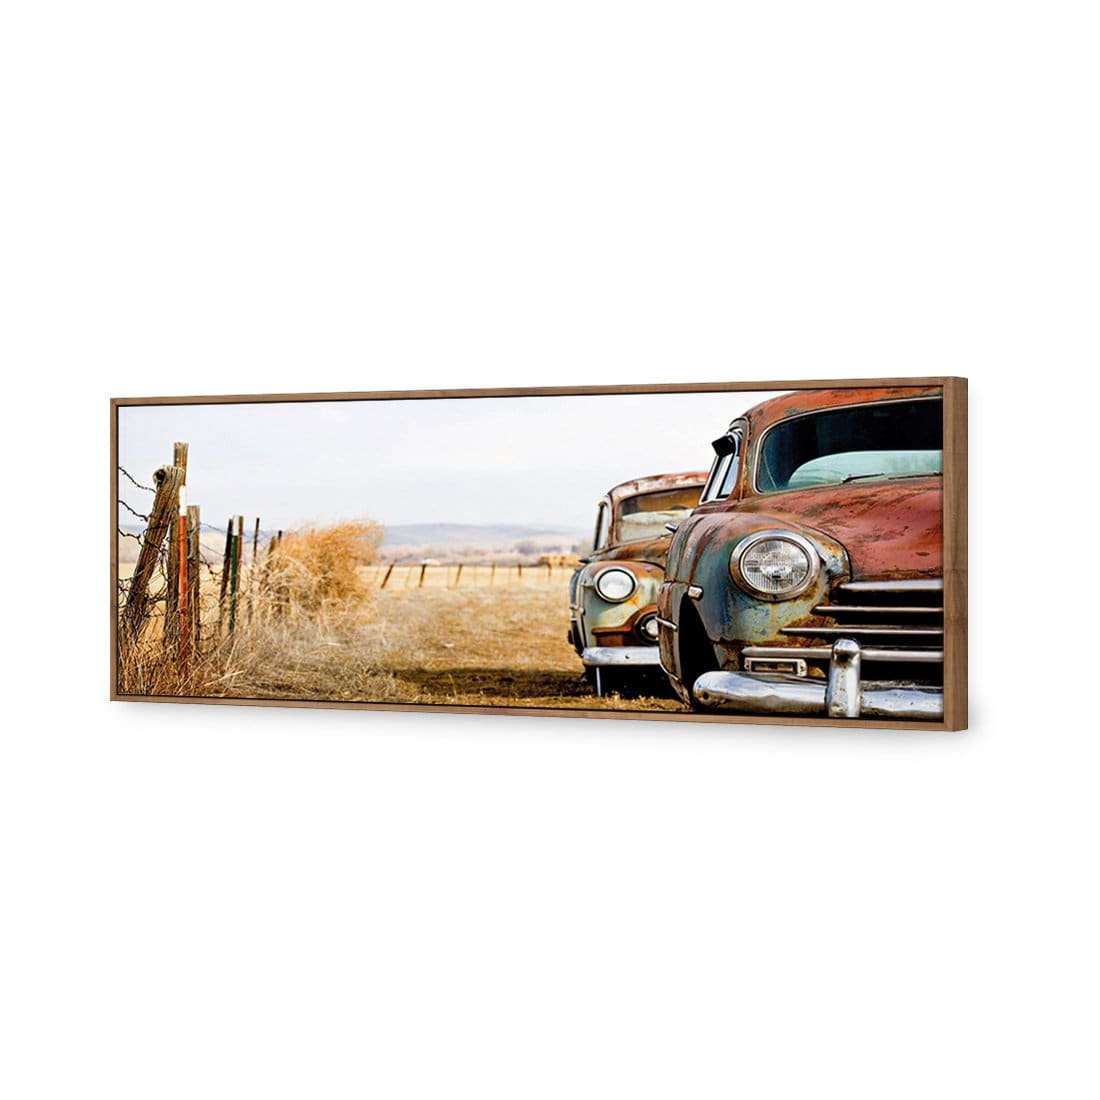 Rusty Cars Canvas Art-Canvas-Wall Art Designs-60x20cm-Canvas - Natural Frame-Wall Art Designs